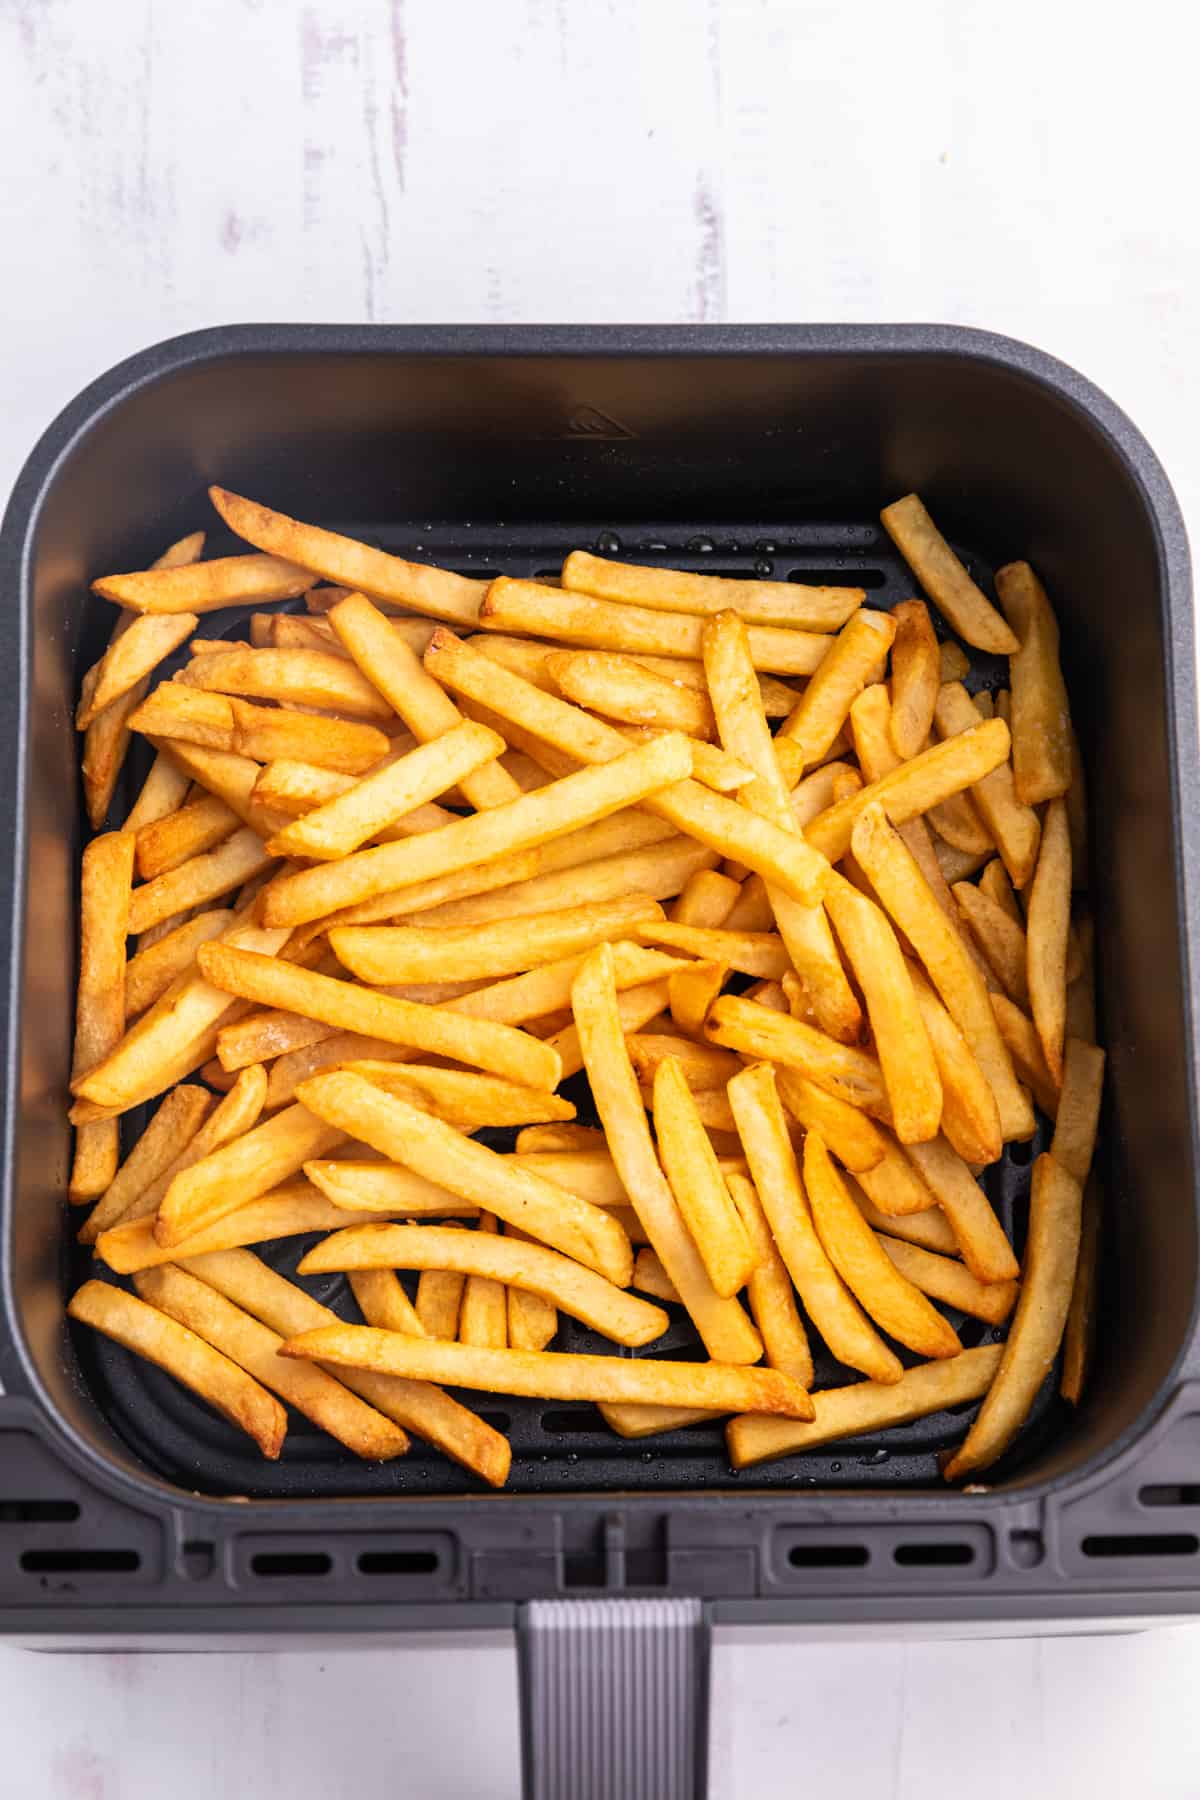 Frozen french fries in an air fryer basket.